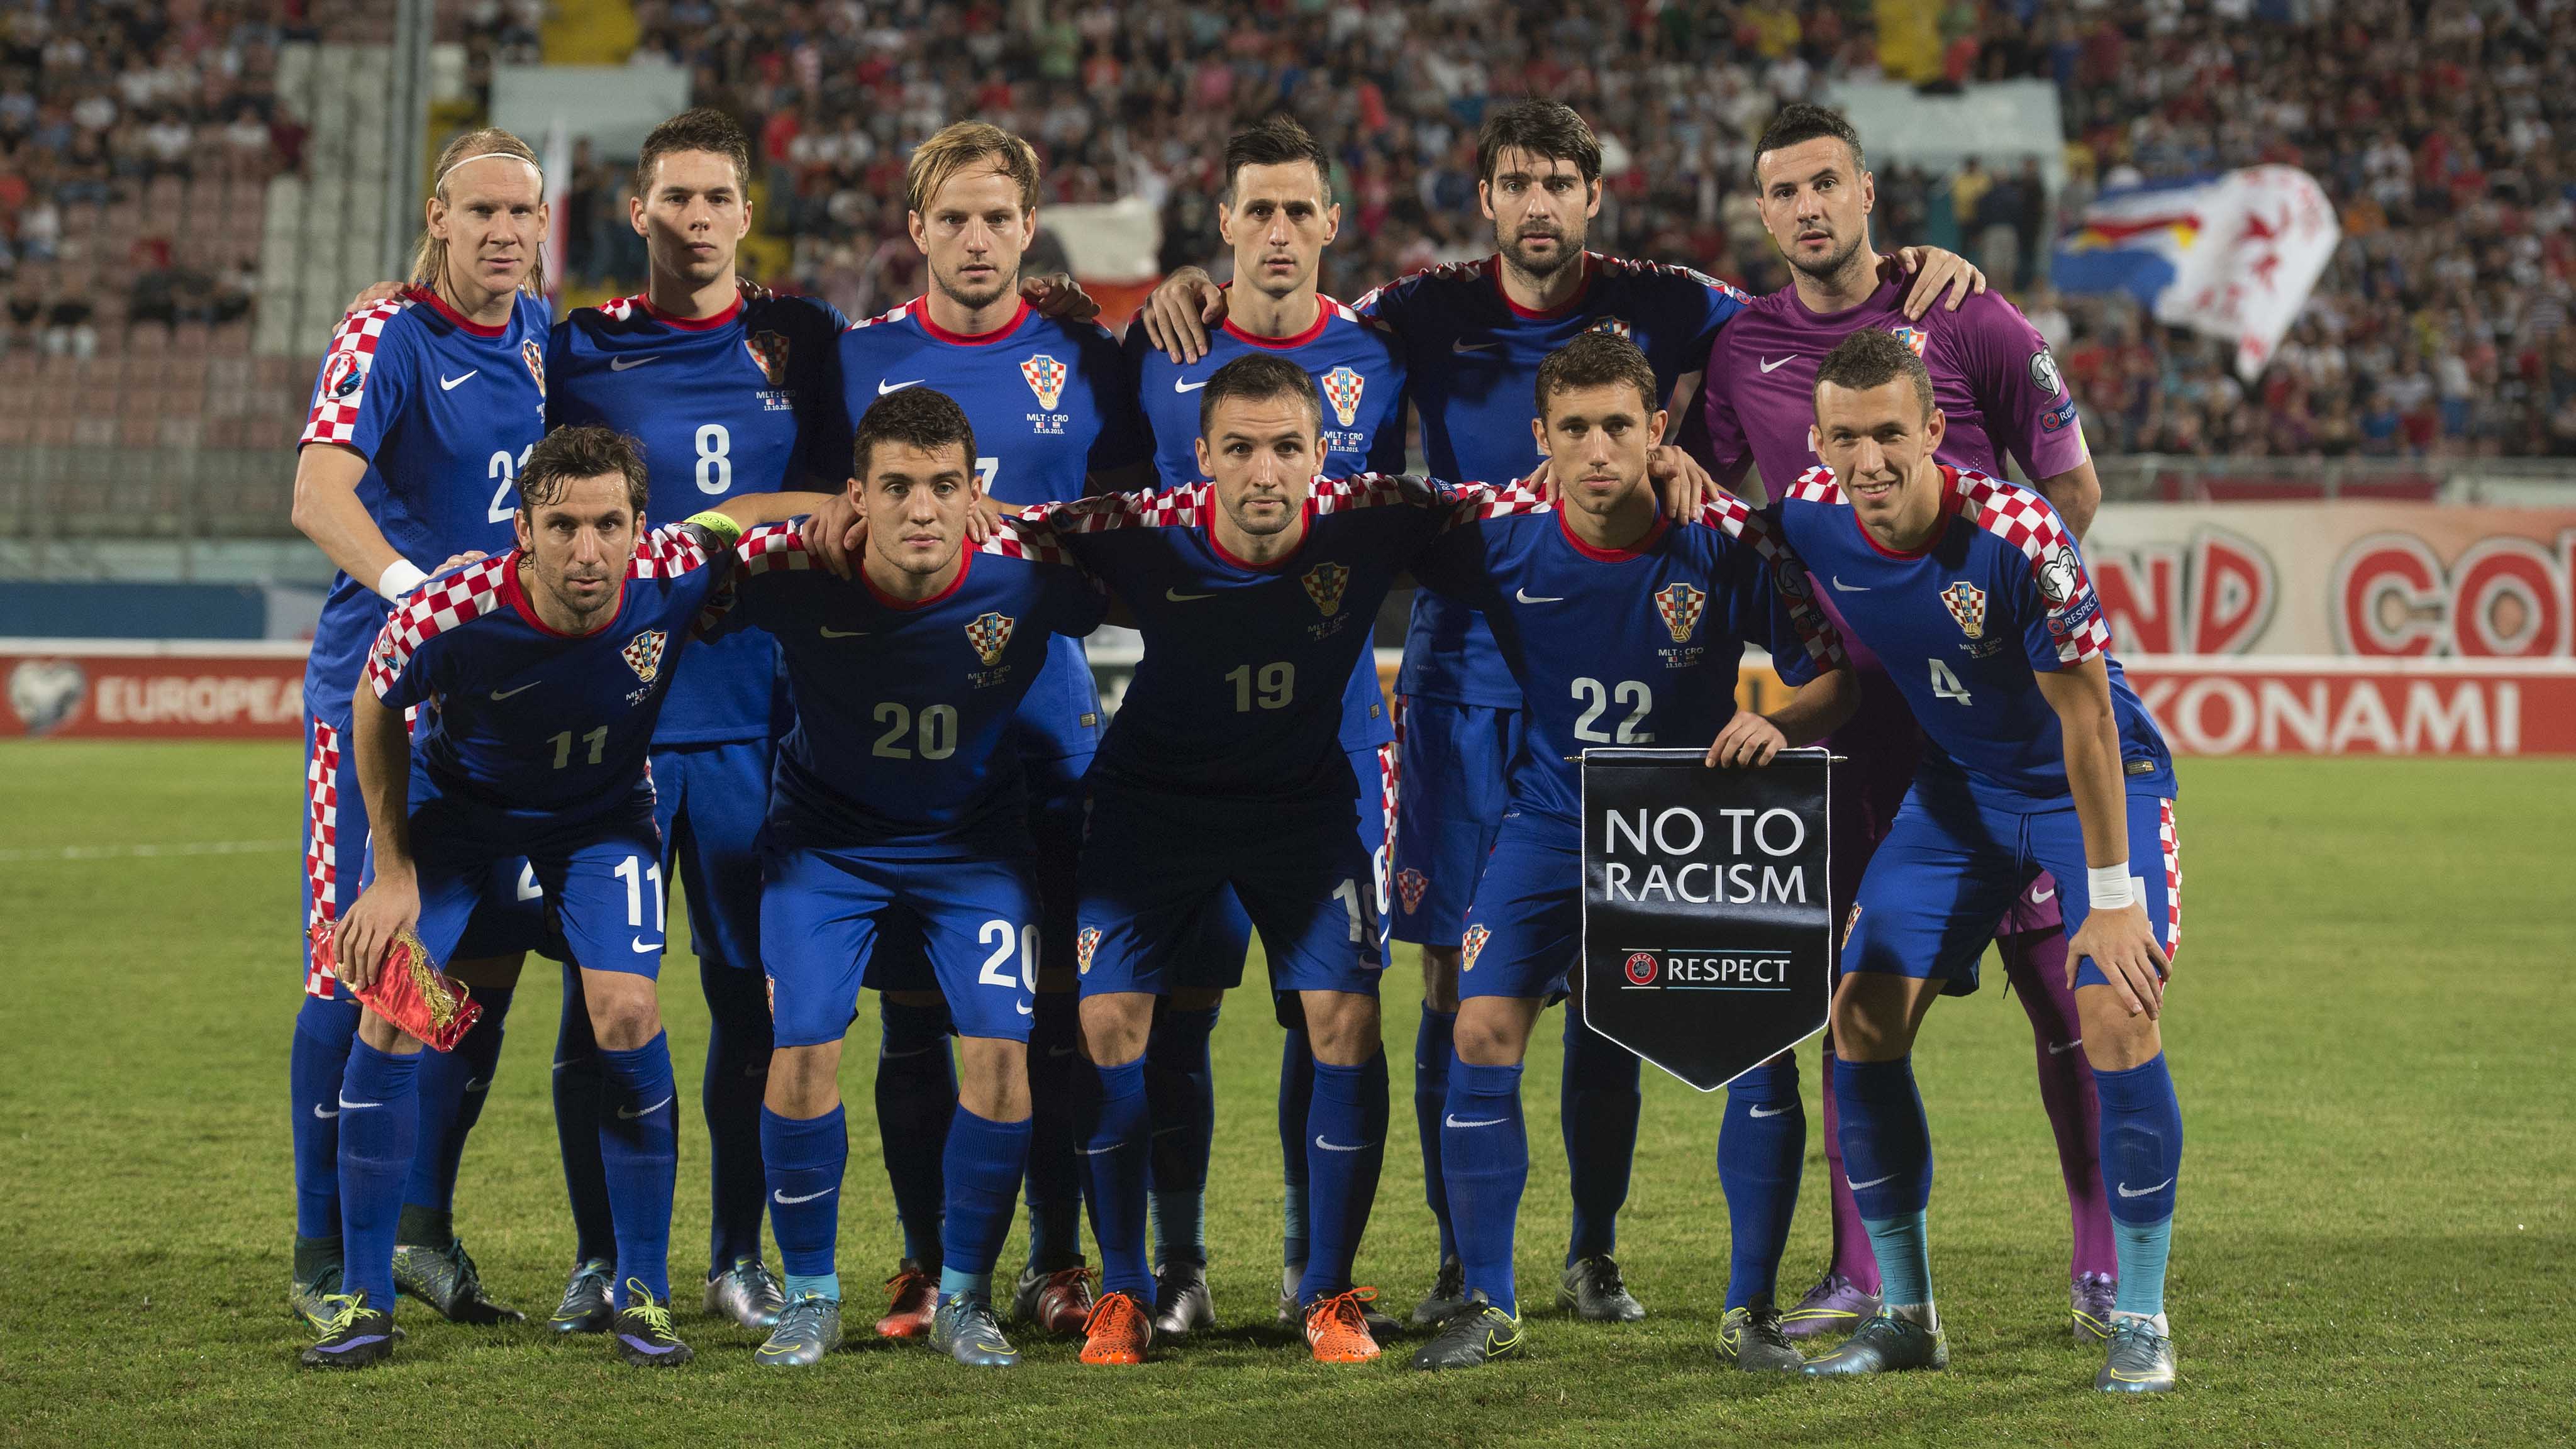 Croatia wins at Malta, qualifies for EURO 2016!